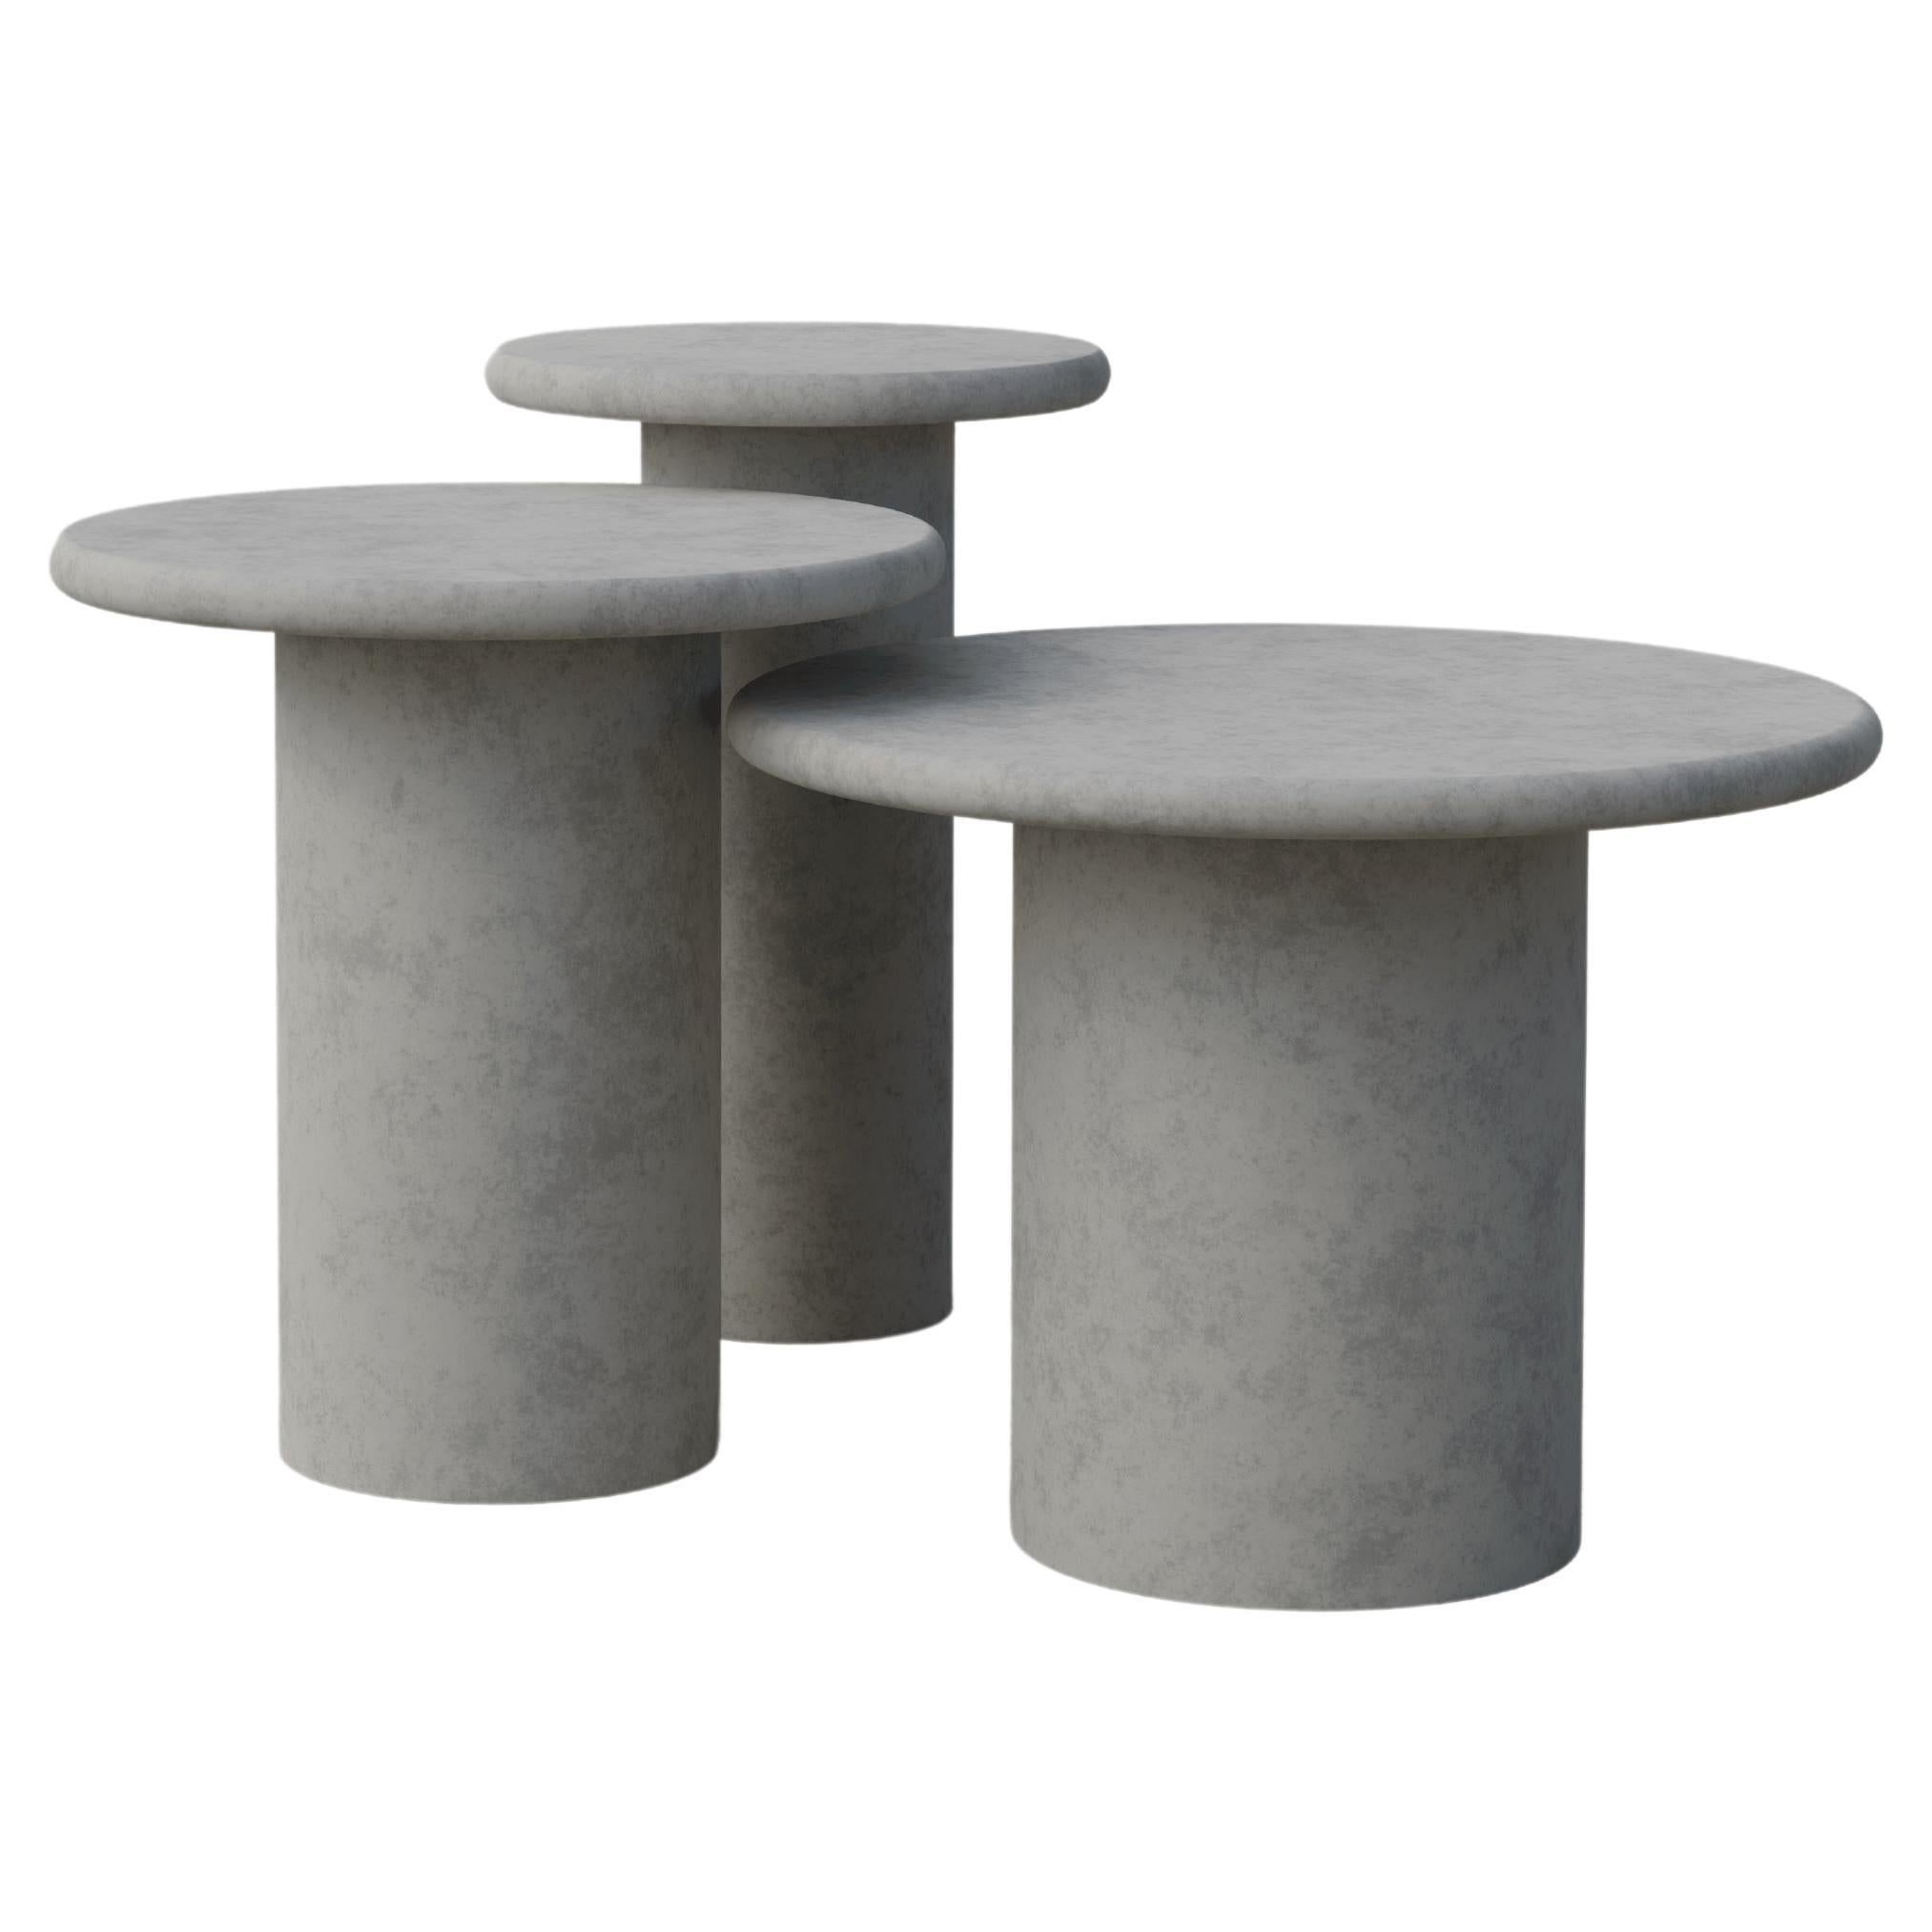 Raindrop Side Table Set, 300, 400, 500, Microcrete / Microcrete For Sale